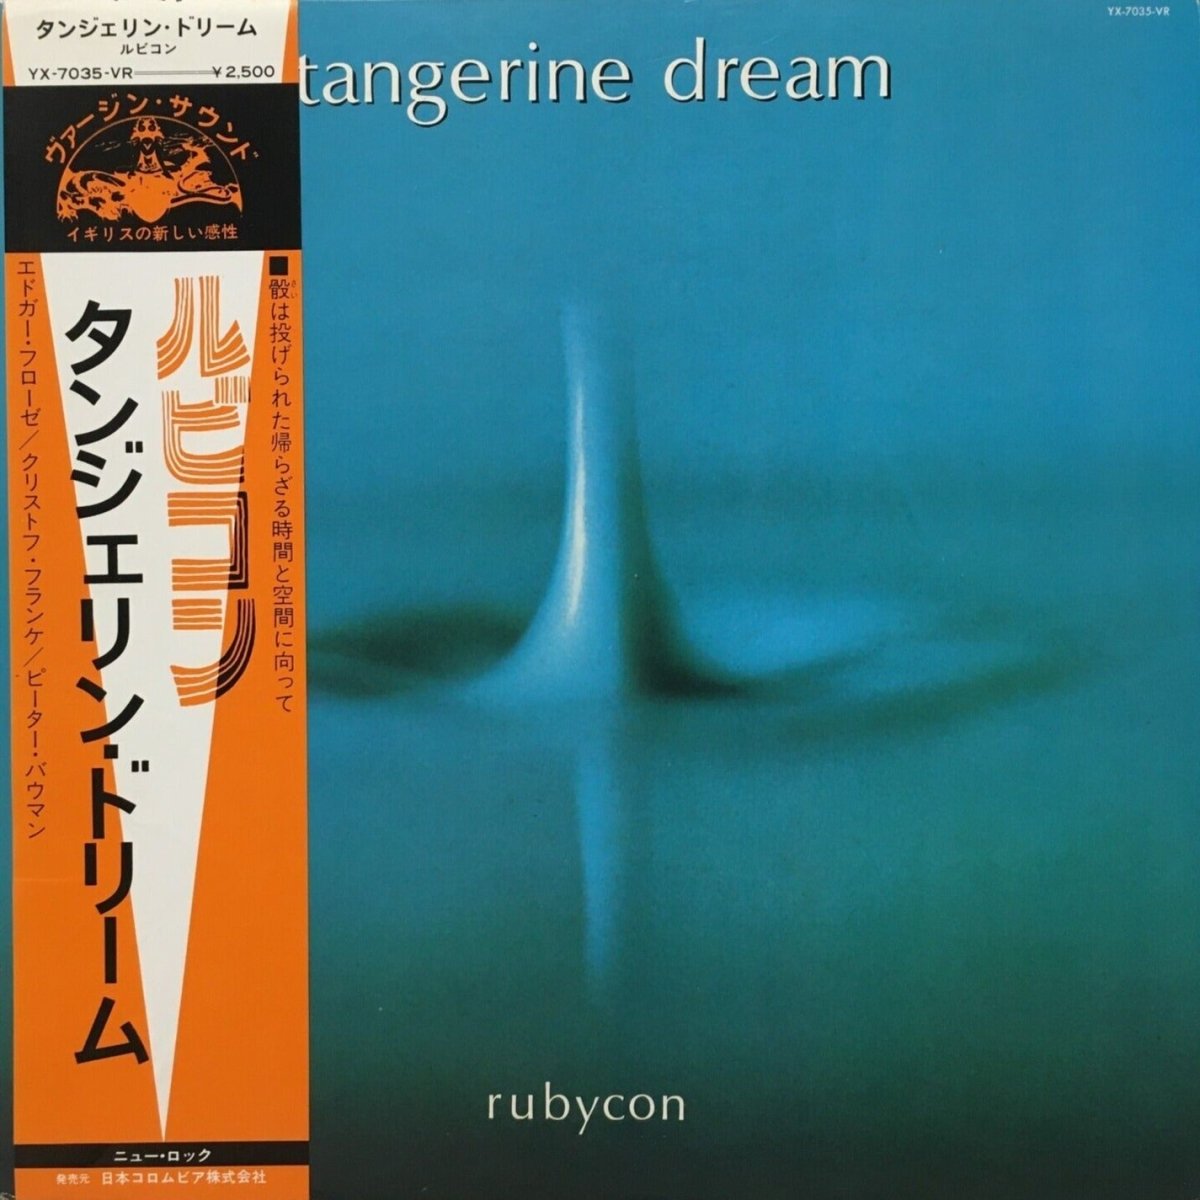 Tangerine Dream - Rubycon Vinyl